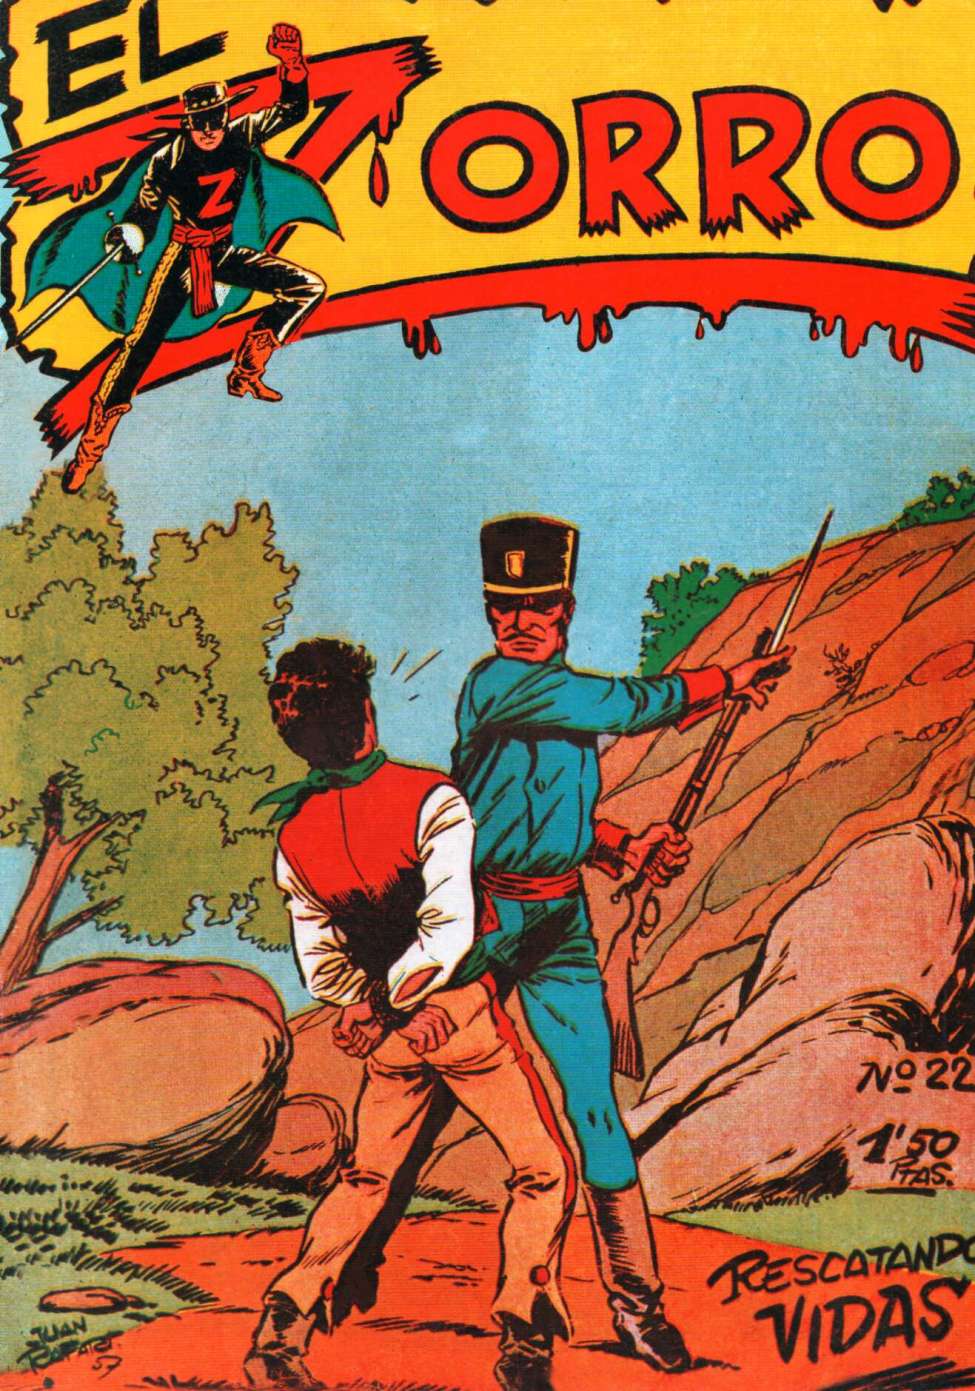 Comic Book Cover For El Zorro 22 - Rescatando Vidas